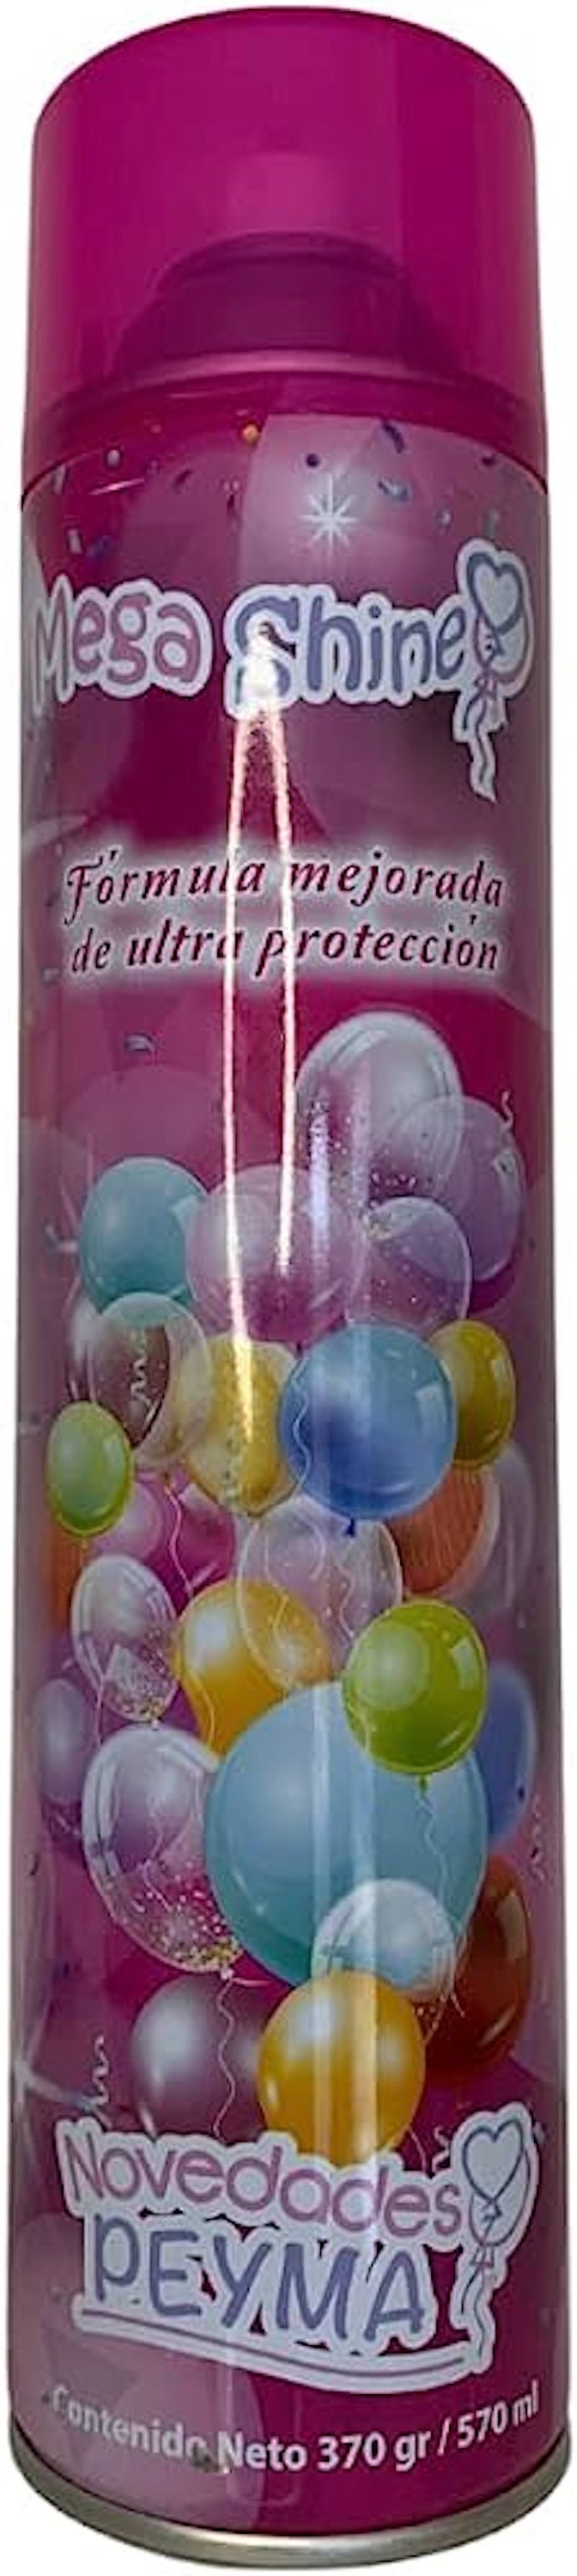 Balloon Glow Spray Shine Spray For Balloons 100ml Shiny Glow Balloons Spray  No Drips Balloon Brightener Spray Precise Mist To - AliExpress